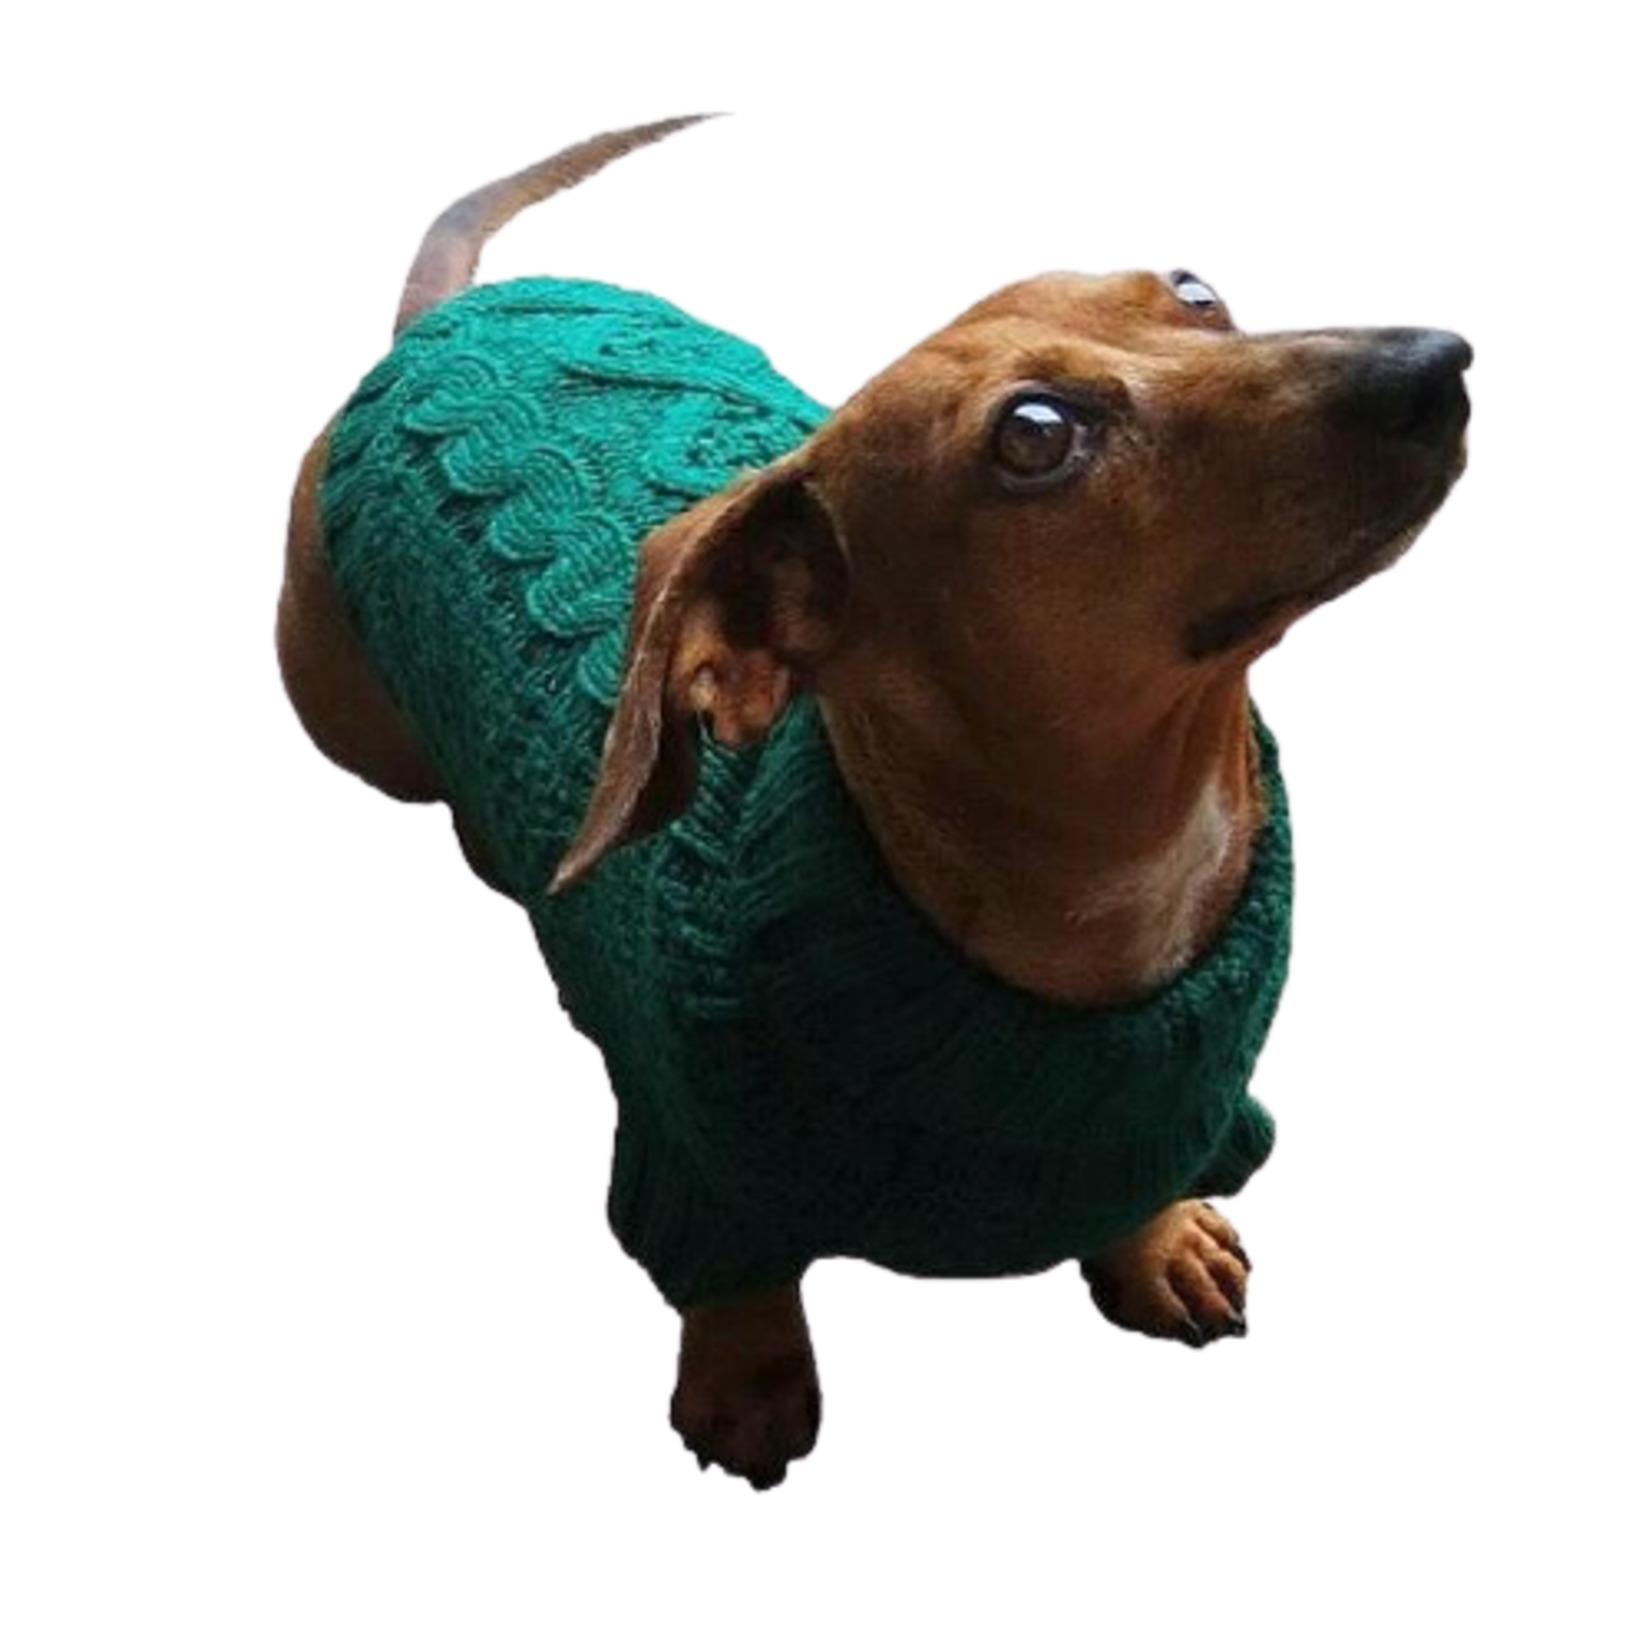 Dallas Dogs Ltd Dallas Dogs Irish Knit Sweater 10”